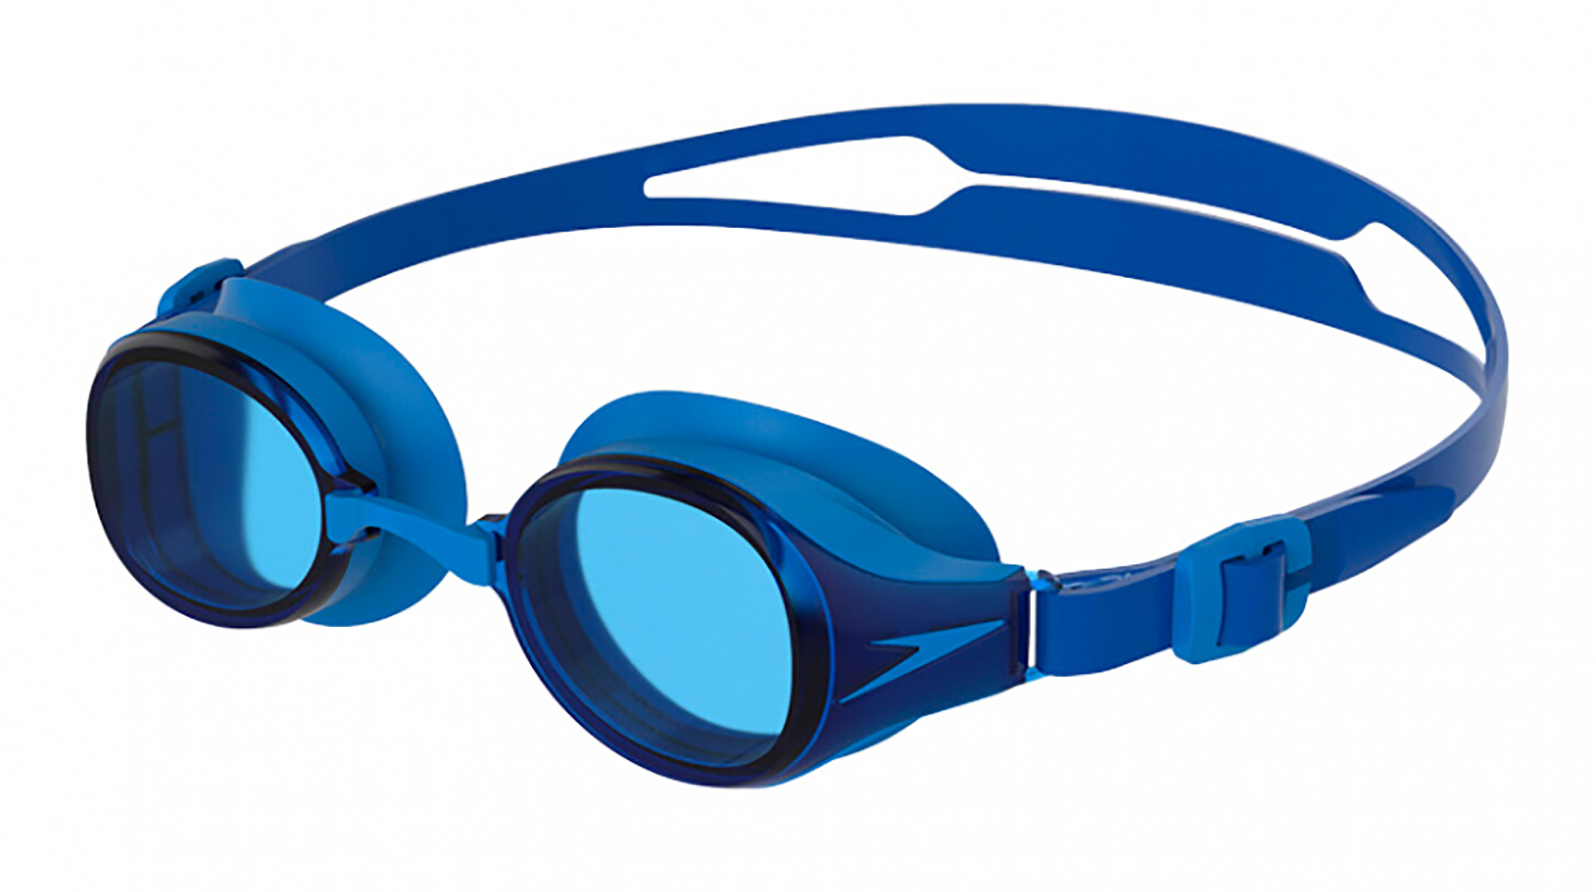 Speedo Очки для плавания Hydropure Optical F809 -2,5 speedo очки для плавания hydropure optical f809 4 5